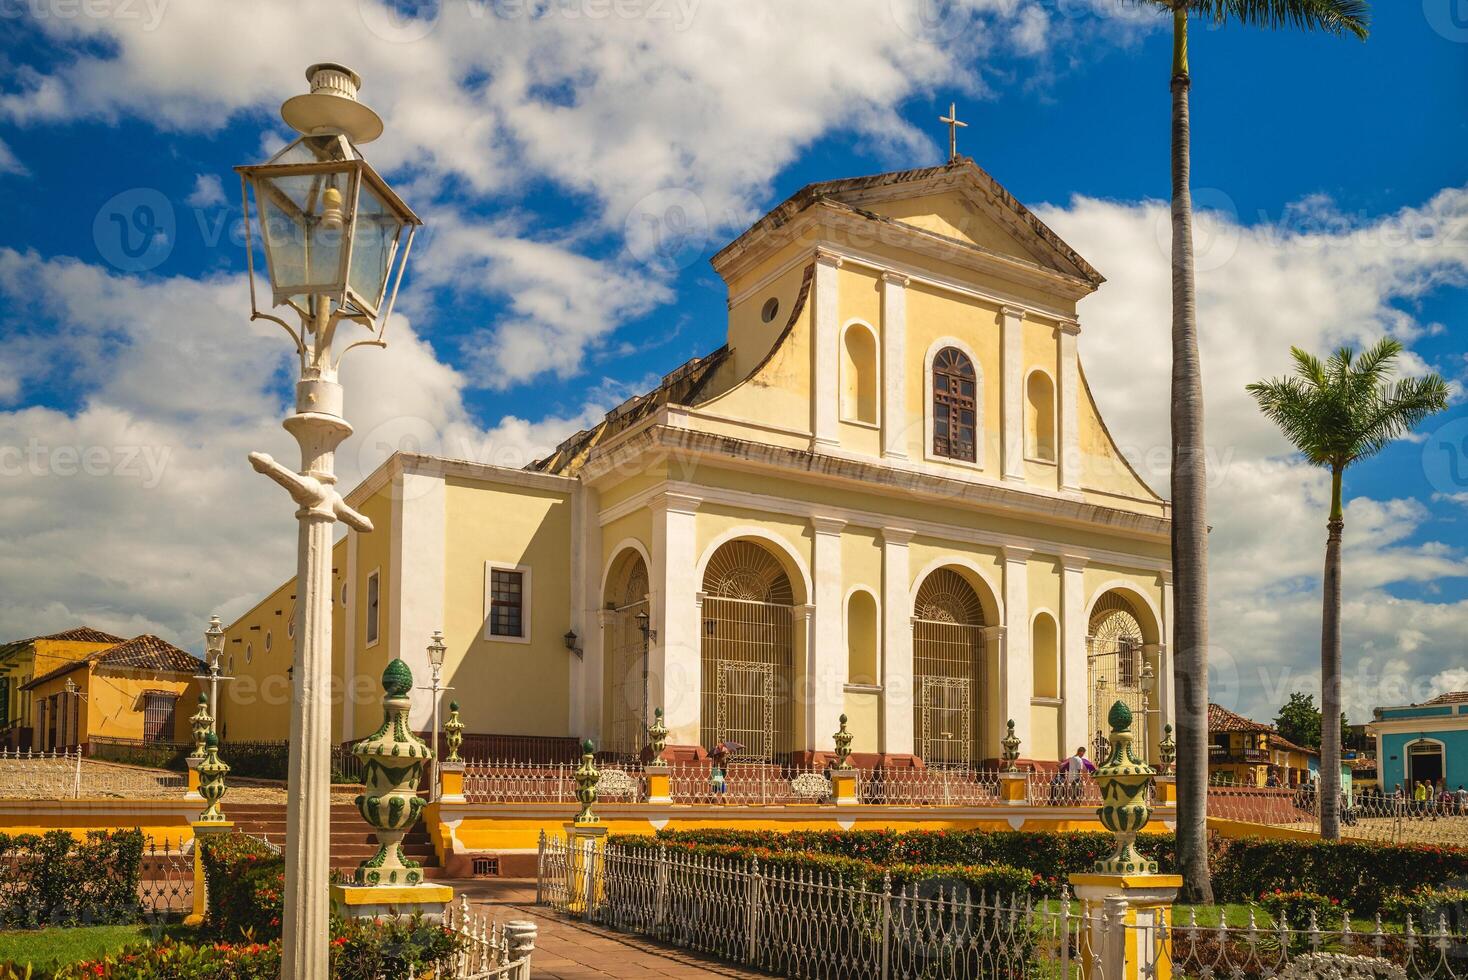 kyrka av de helig treenighet, iglesia parroquial de la santisima trinidad i kuba foto